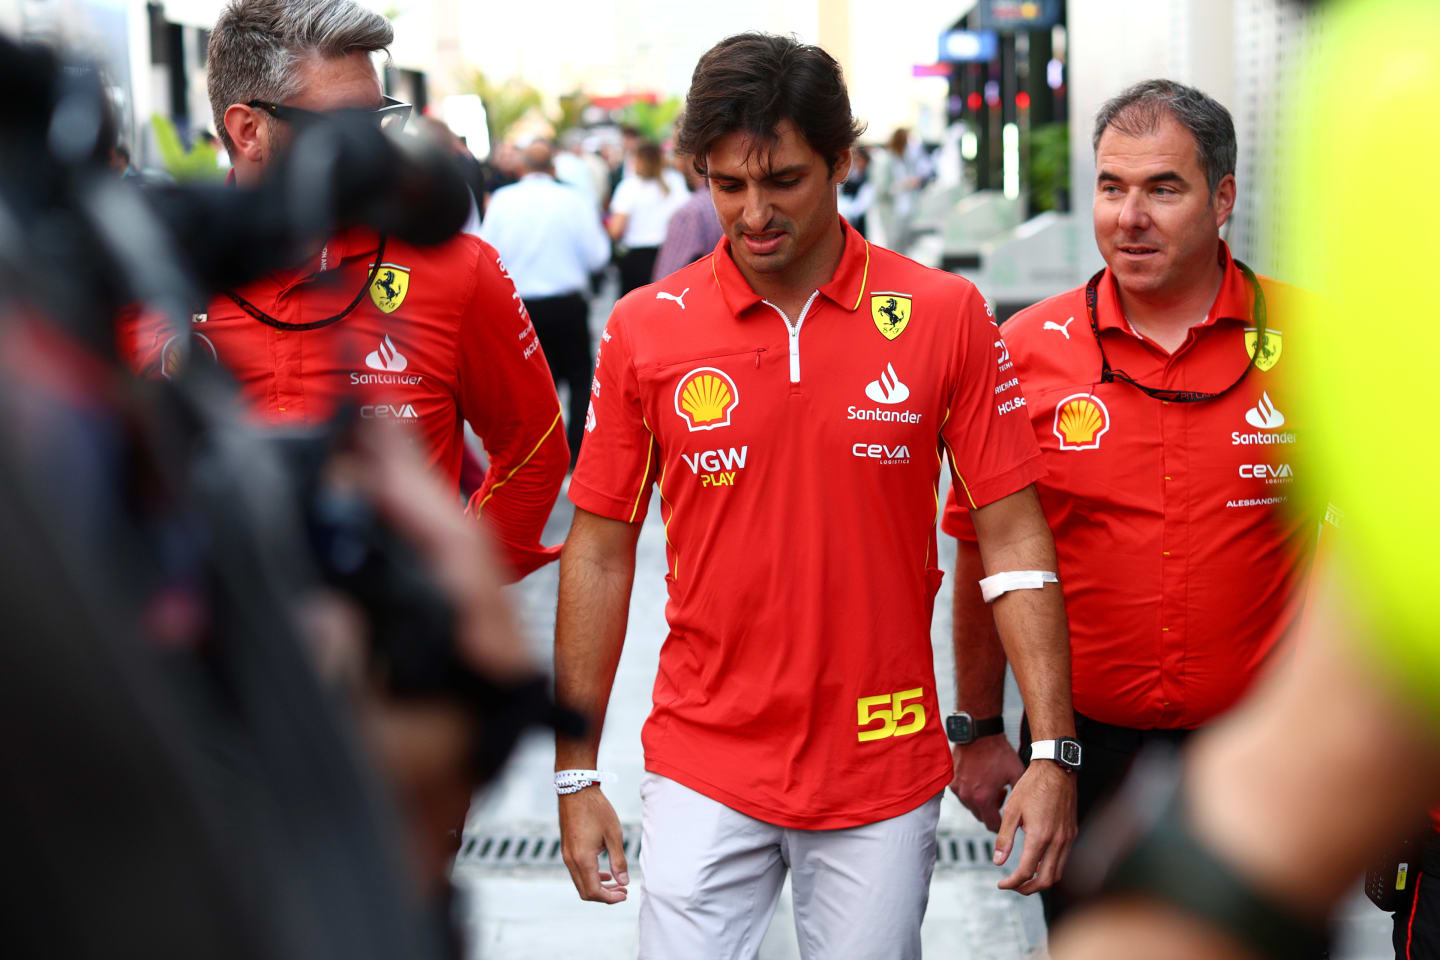 JEDDAH, SAUDI ARABIA - MARCH 09: Carlos Sainz of Spain and Ferrari walks in the Paddock after being